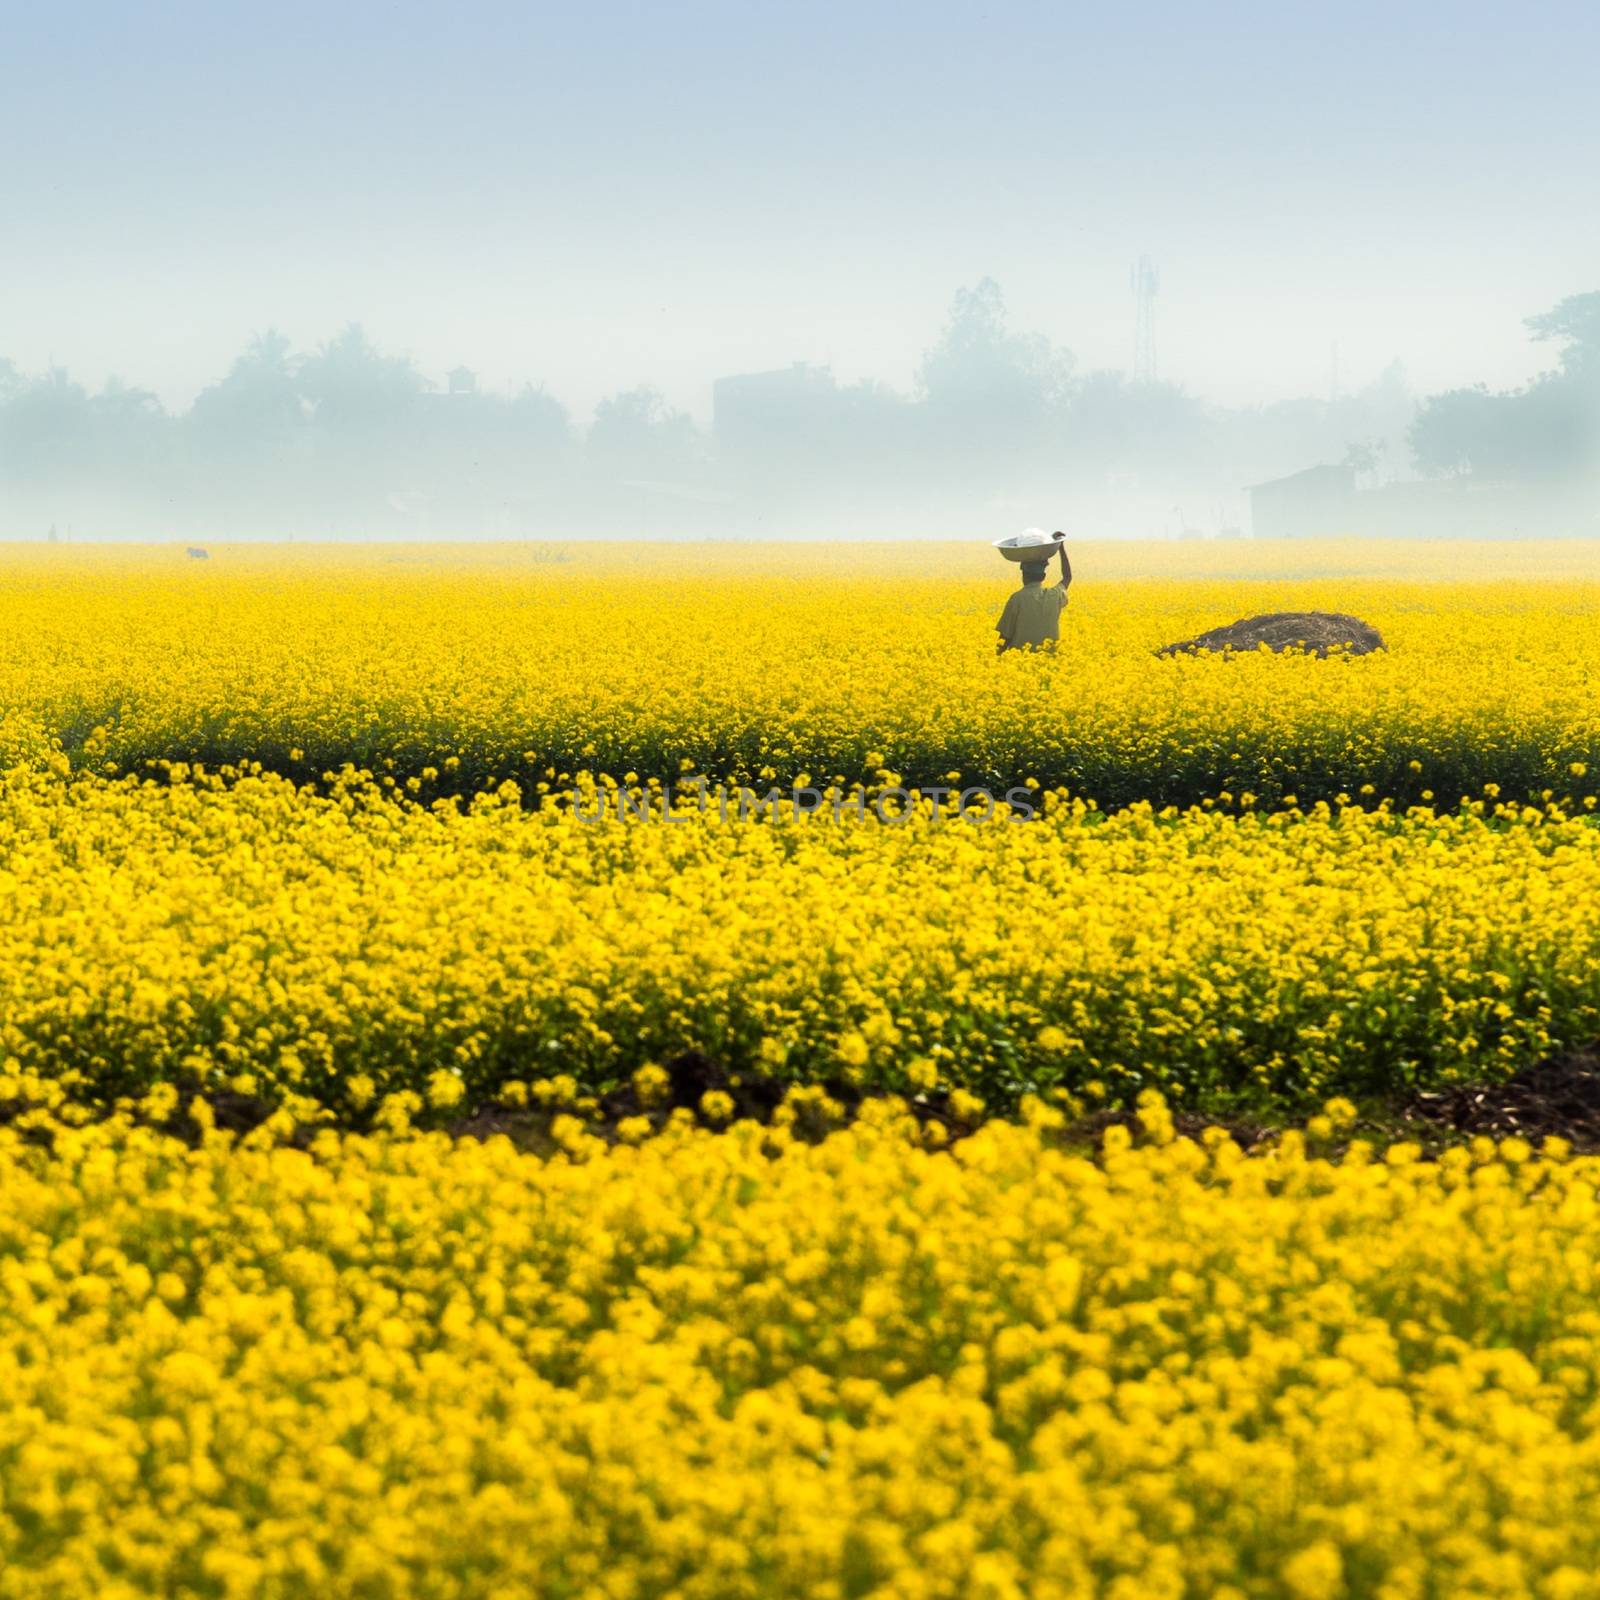 Mustard field in rural area of Bangladesh